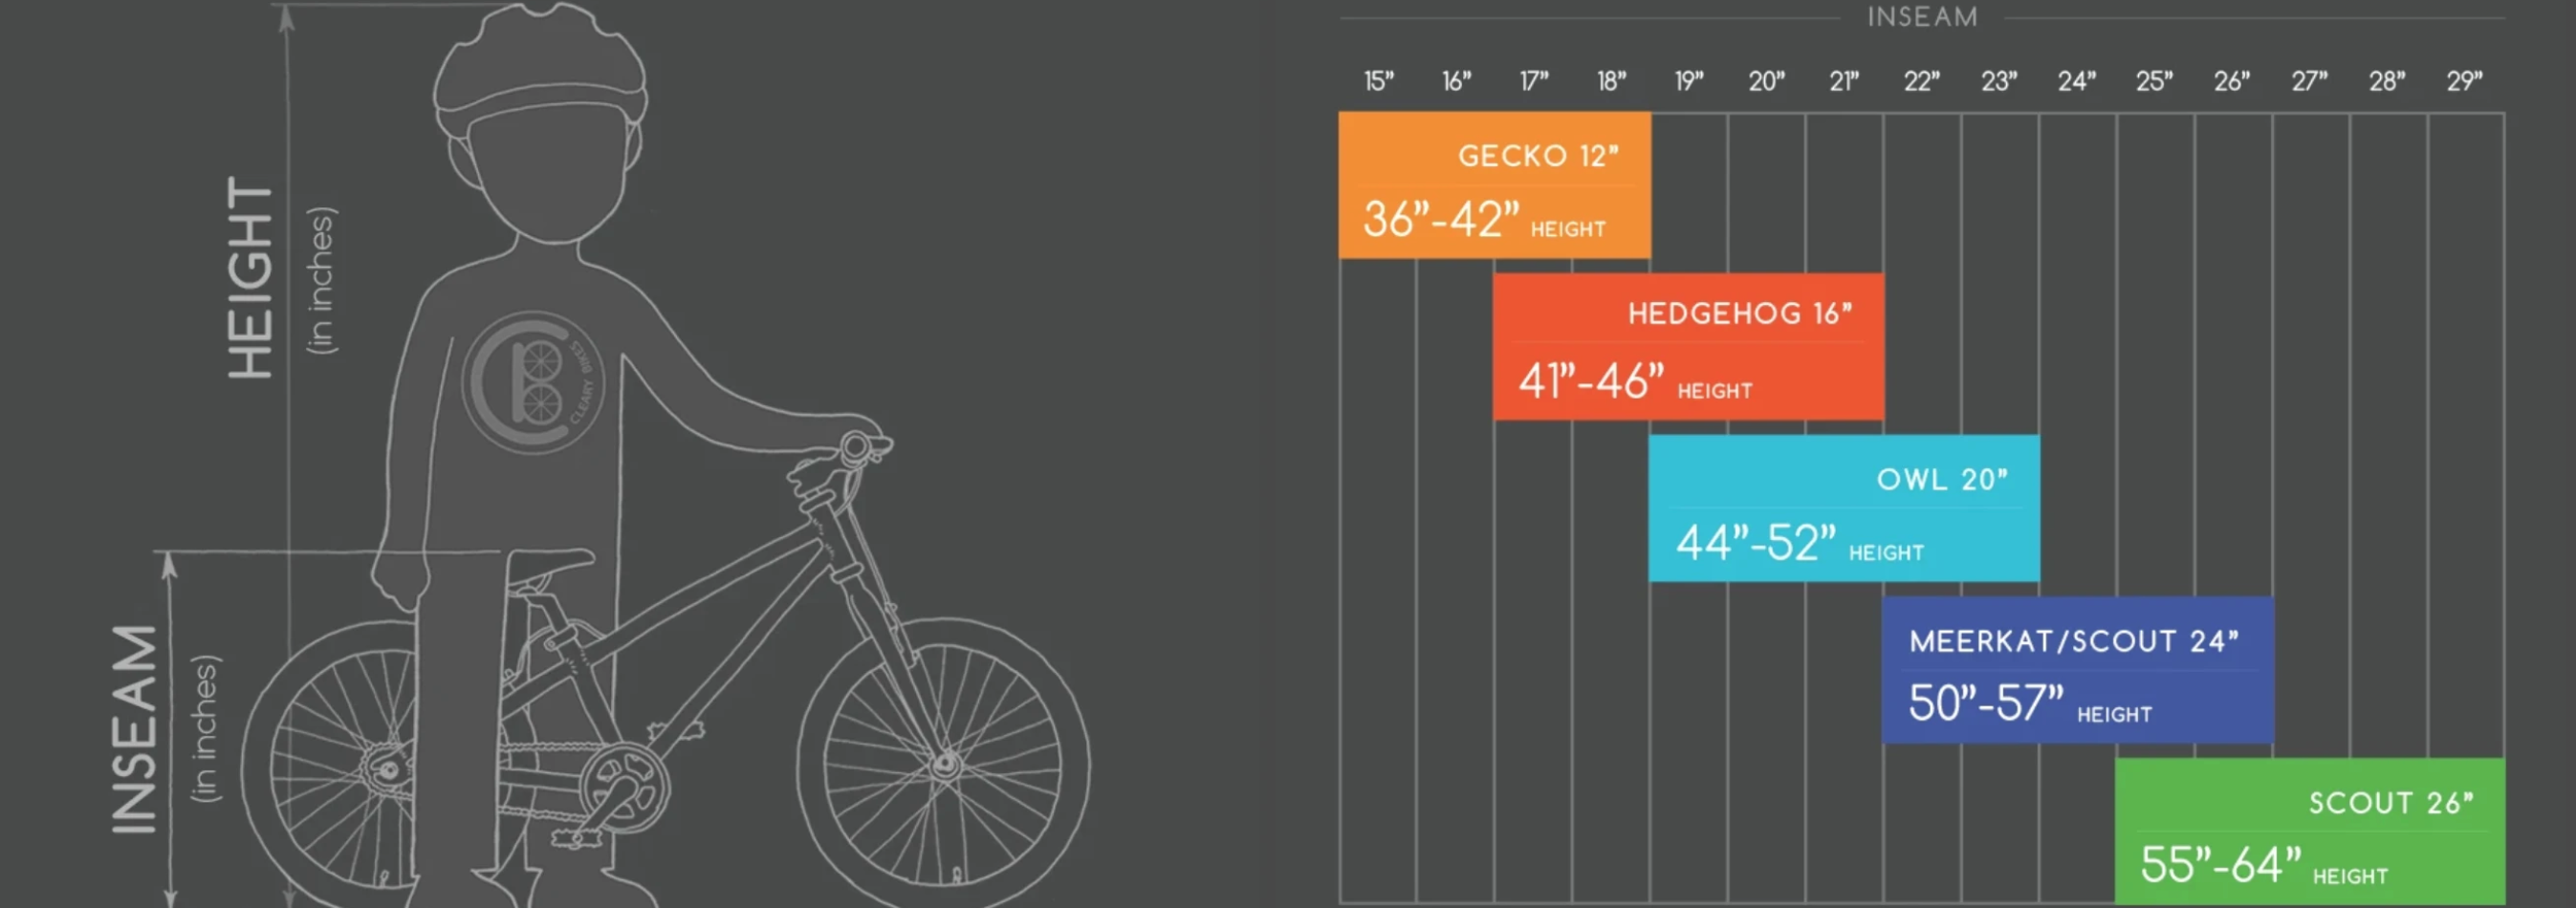 bike size chart by height kids